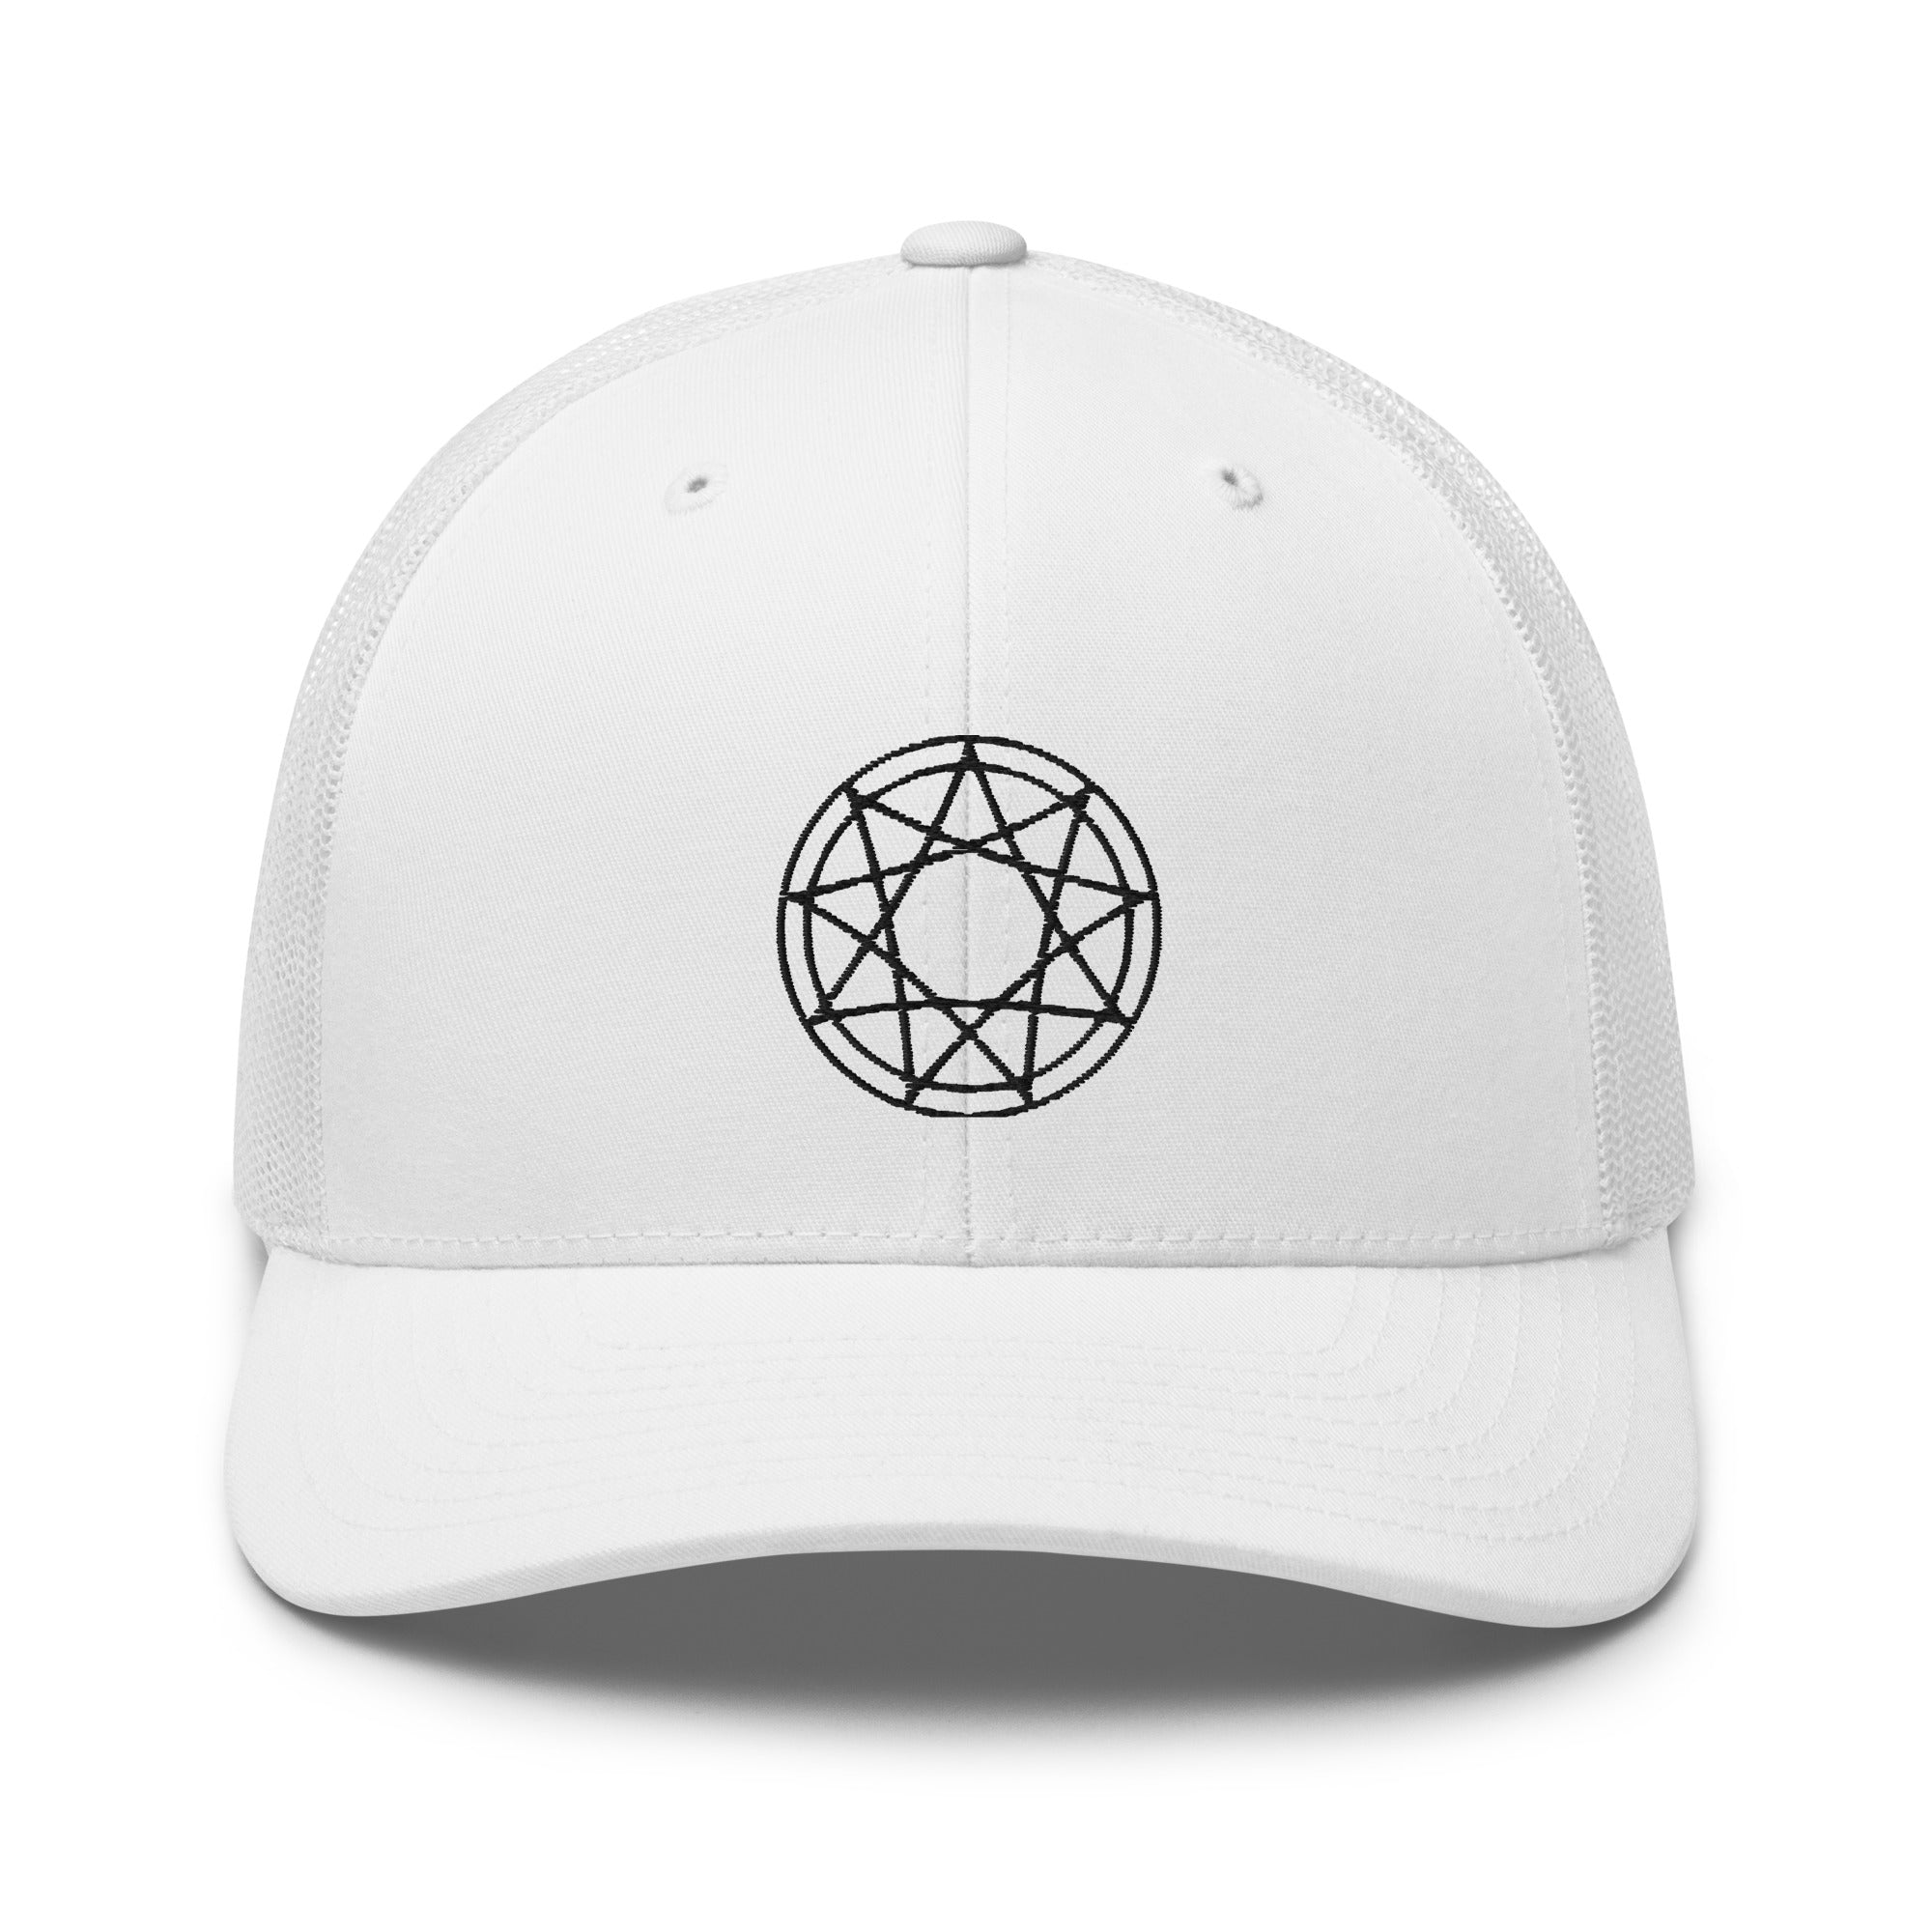 Black 9 Point Star Pentagram Occult Symbol Embroidered Retro Trucker Cap Snapback Hat